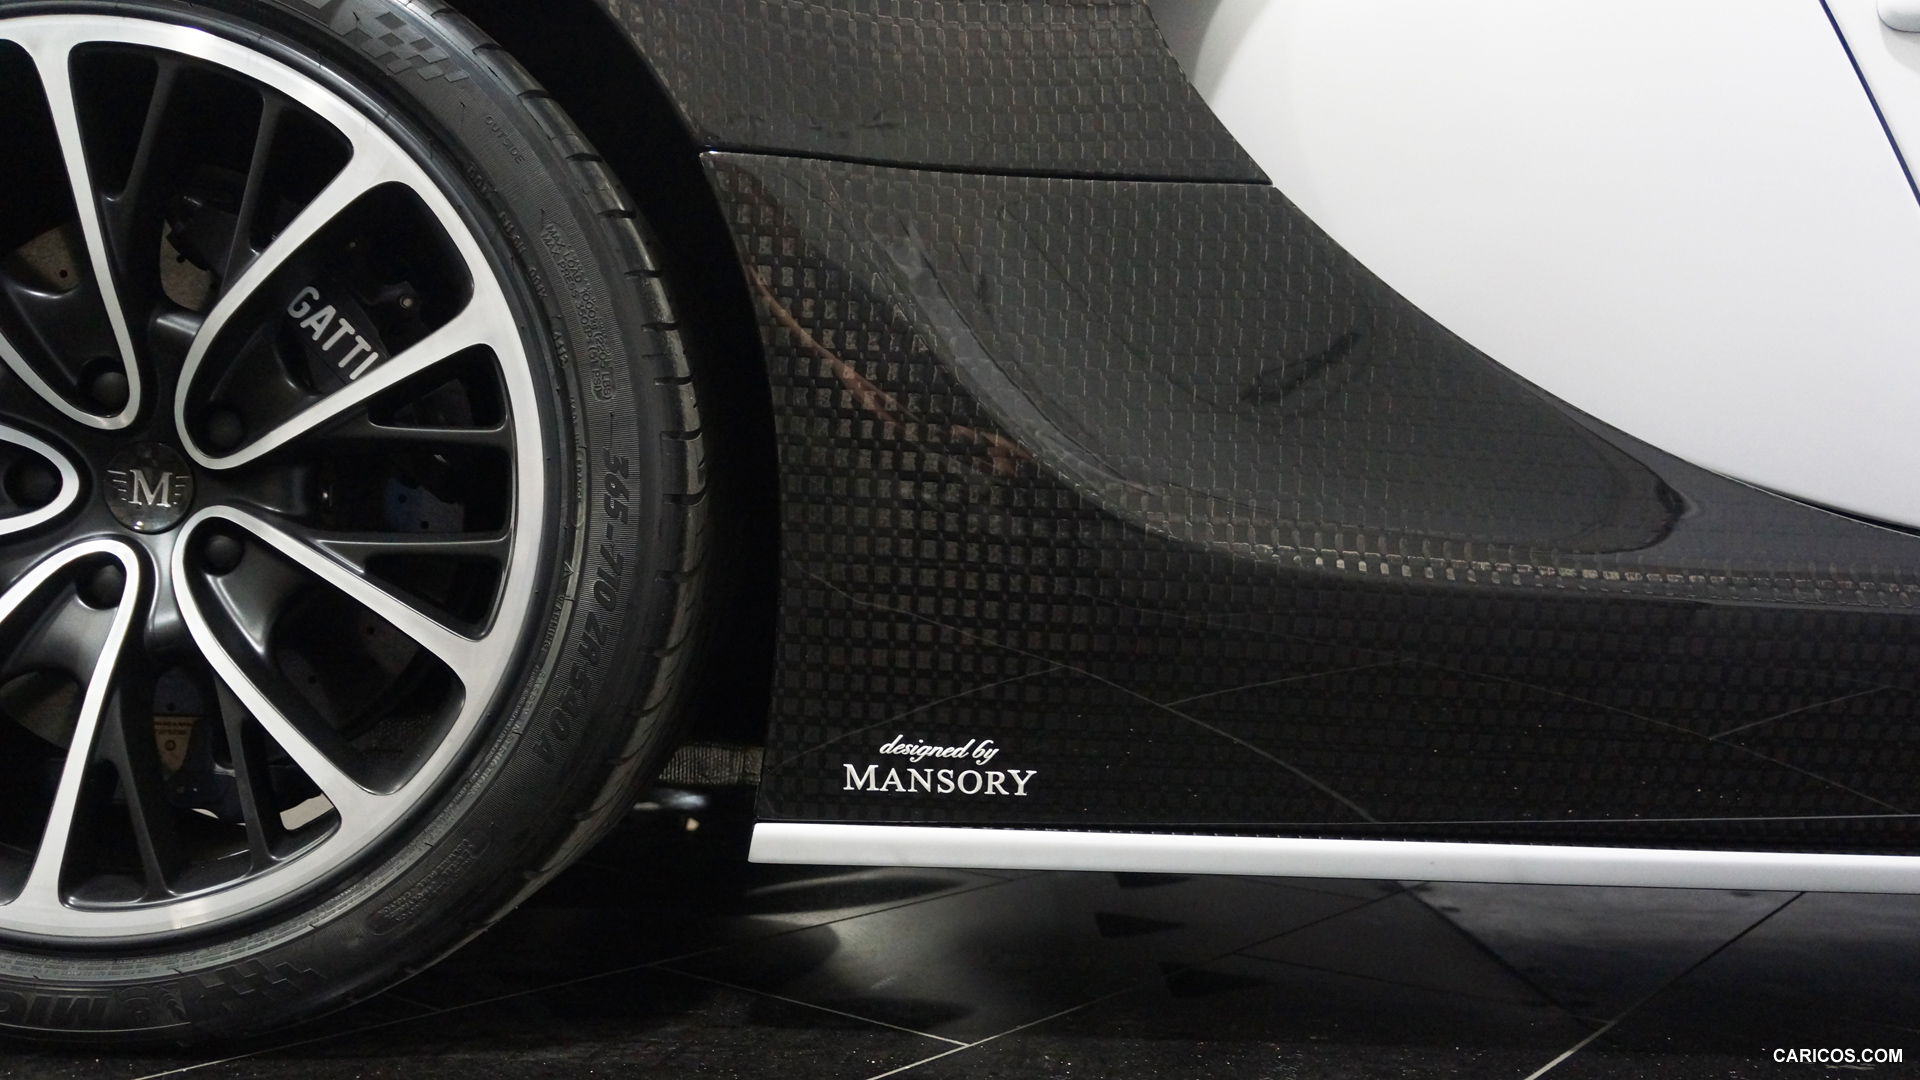 2014 Mansory Vivere based on Bugatti Veyron 16.4  - Detail, #3 of 8